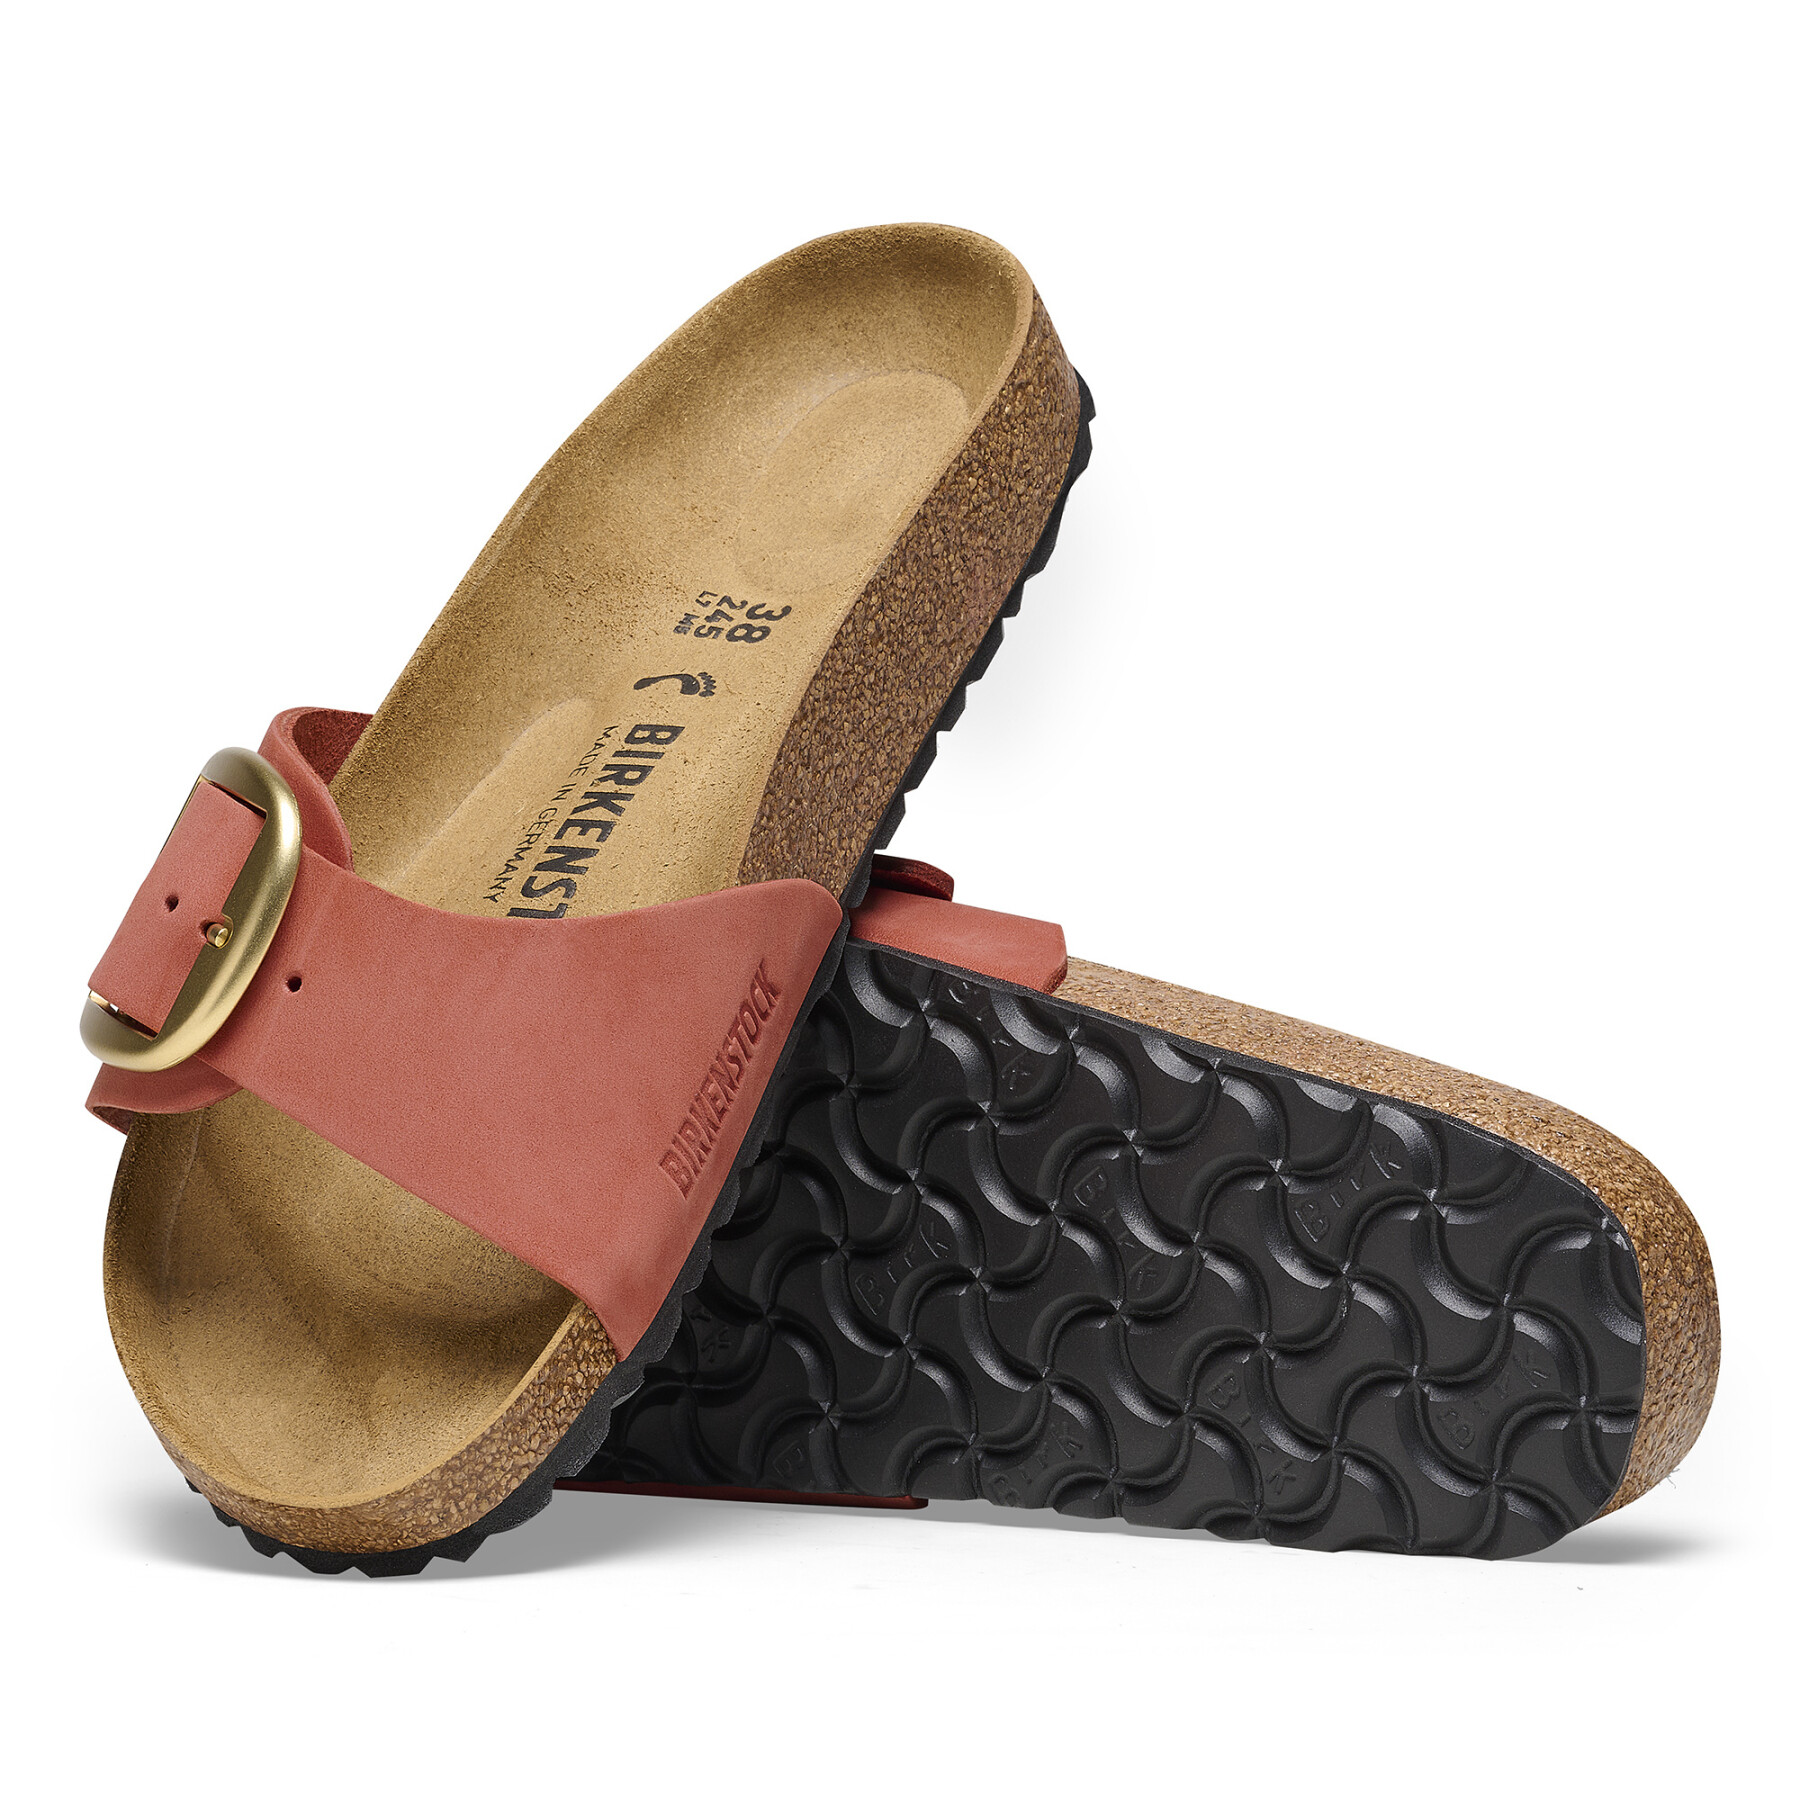 Sandálias estreitas para mulher Birkenstock Madrid Big Buckle Nubuck Leather